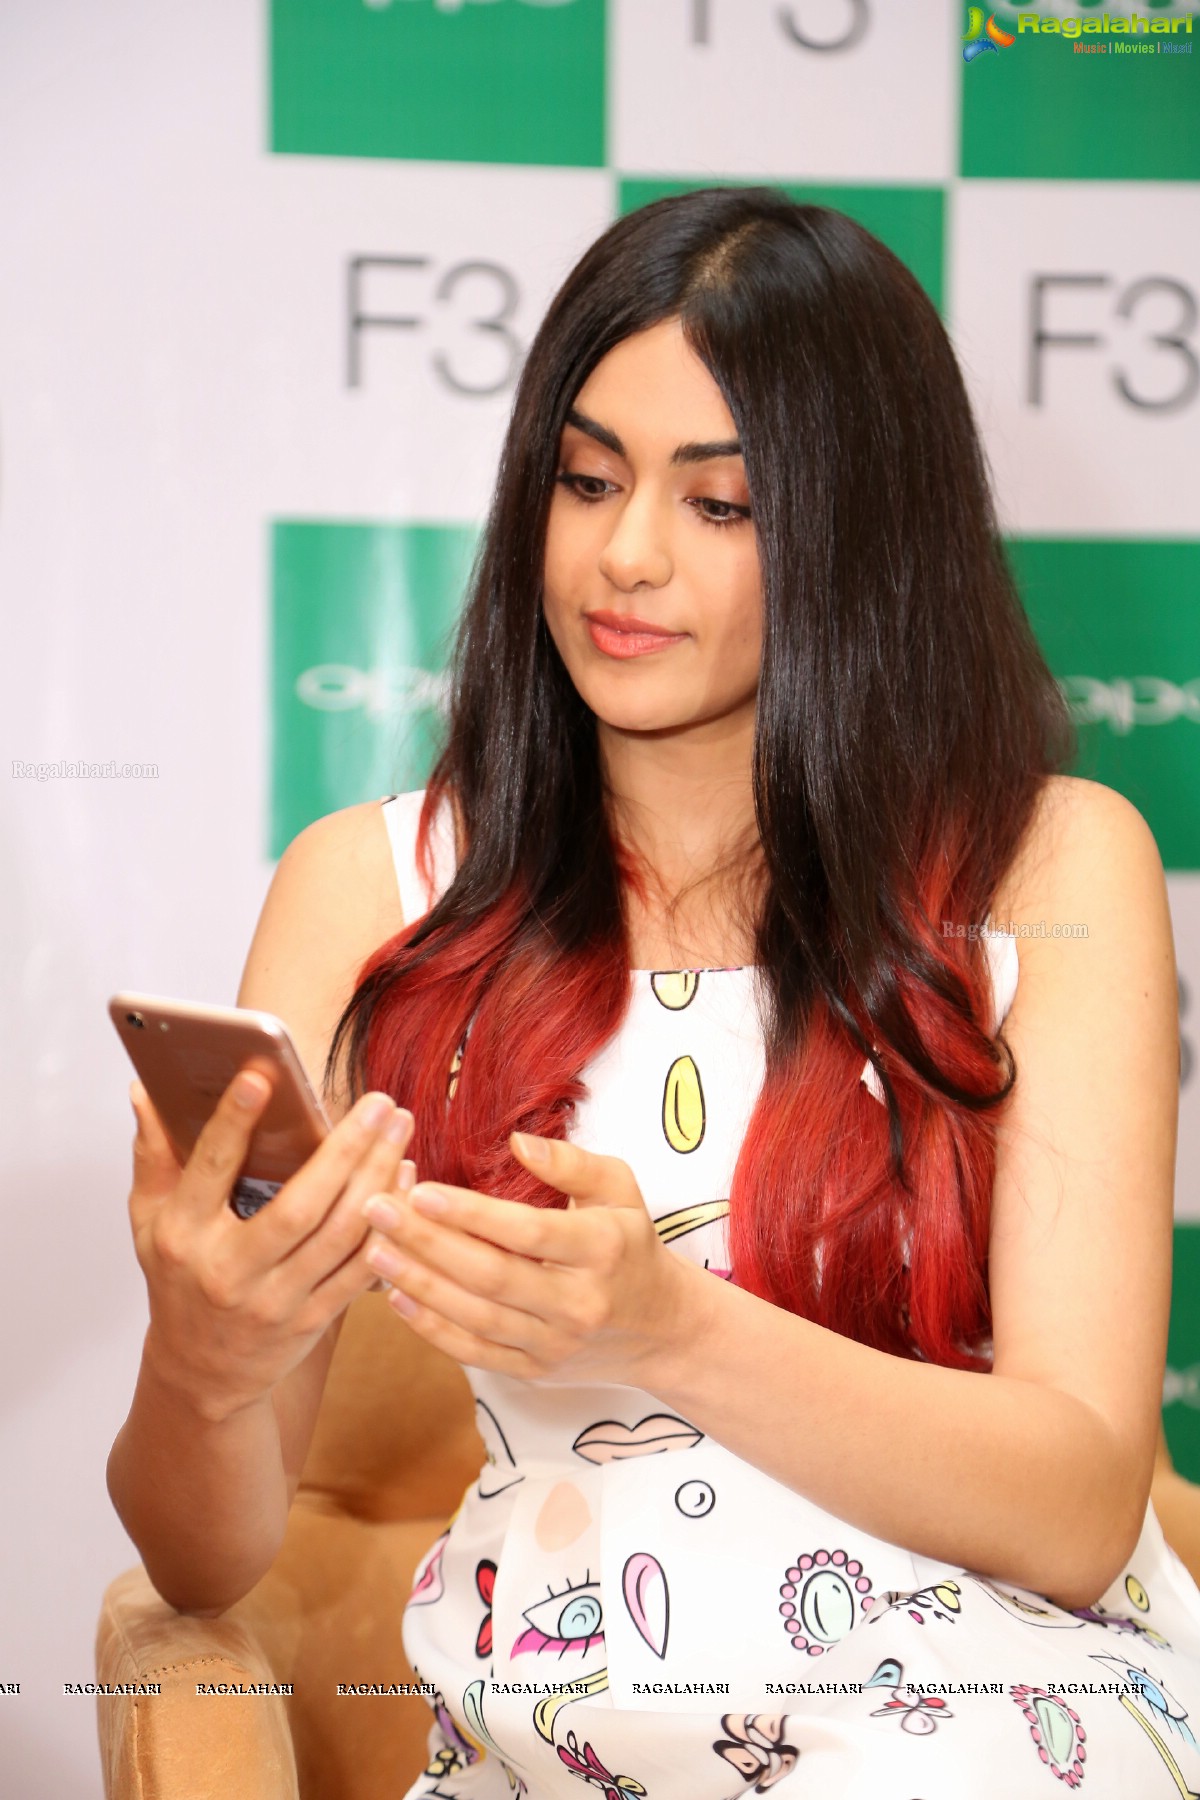 Adah Sharma launches Oppo F3 Plus Mobiles at Lemon Tree, Hyderabad